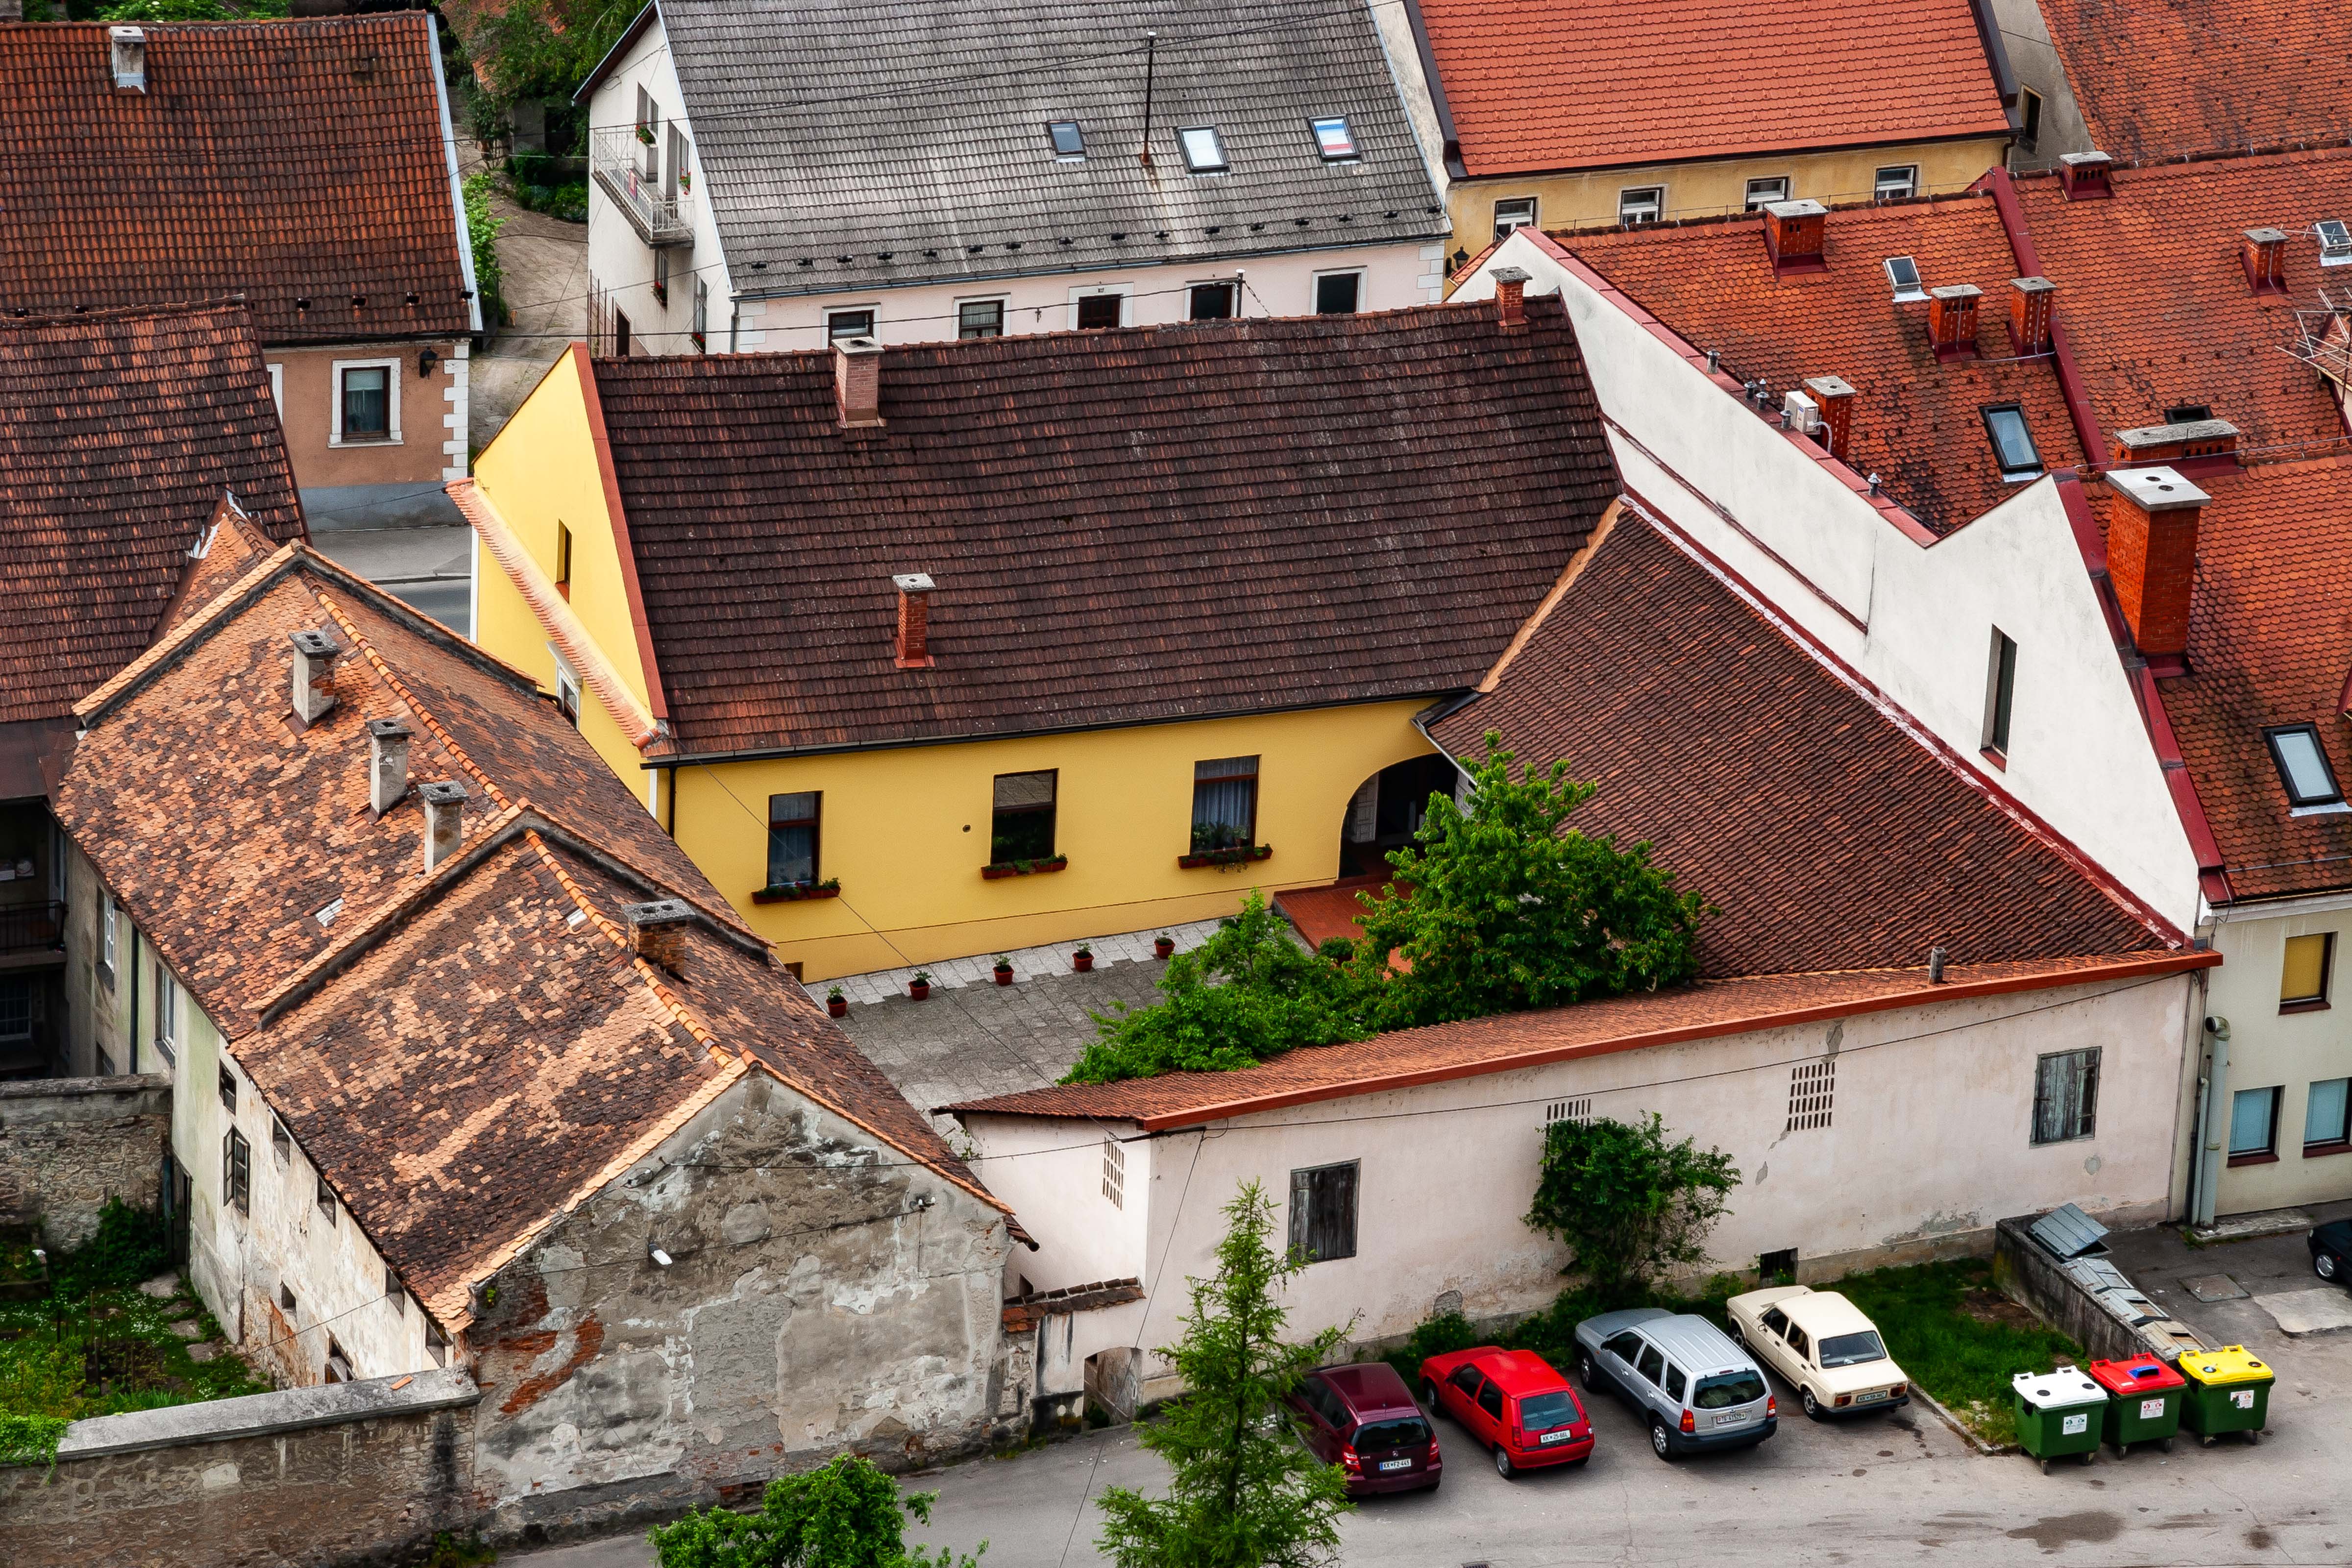 Slovenia, Sevnica Prov, Rooftops, 2006, IMG 7677